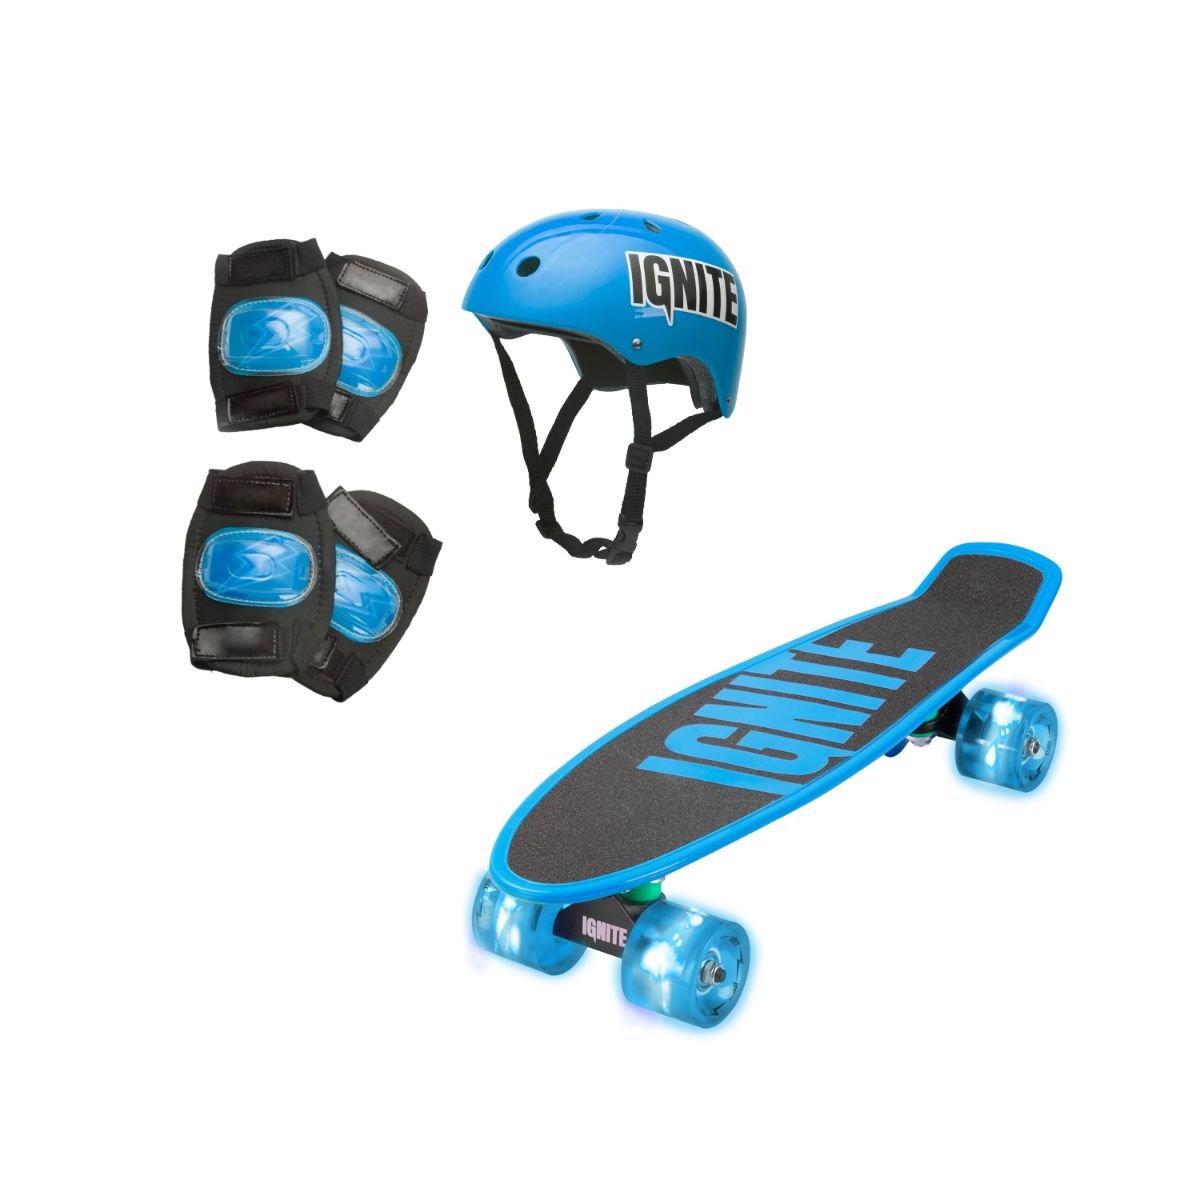 Skateboard si echipament de protectie Ignite, Albastru albastru imagine 2022 protejamcopilaria.ro